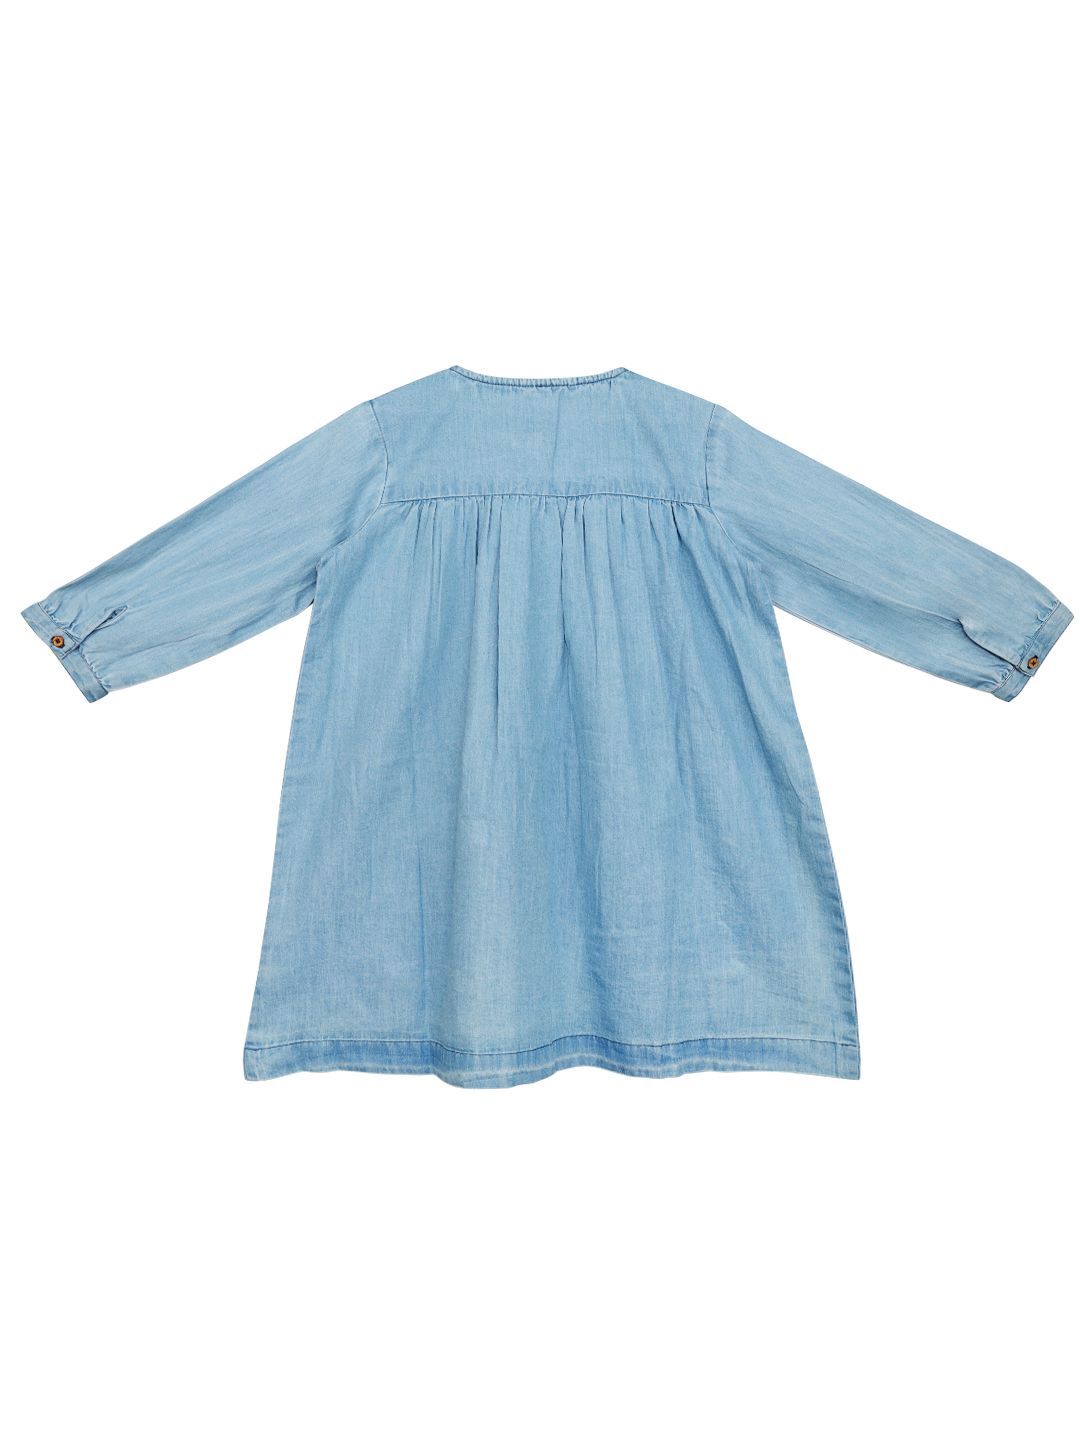 Ishin Girls Denim Cotton Embroidered Flared Dress